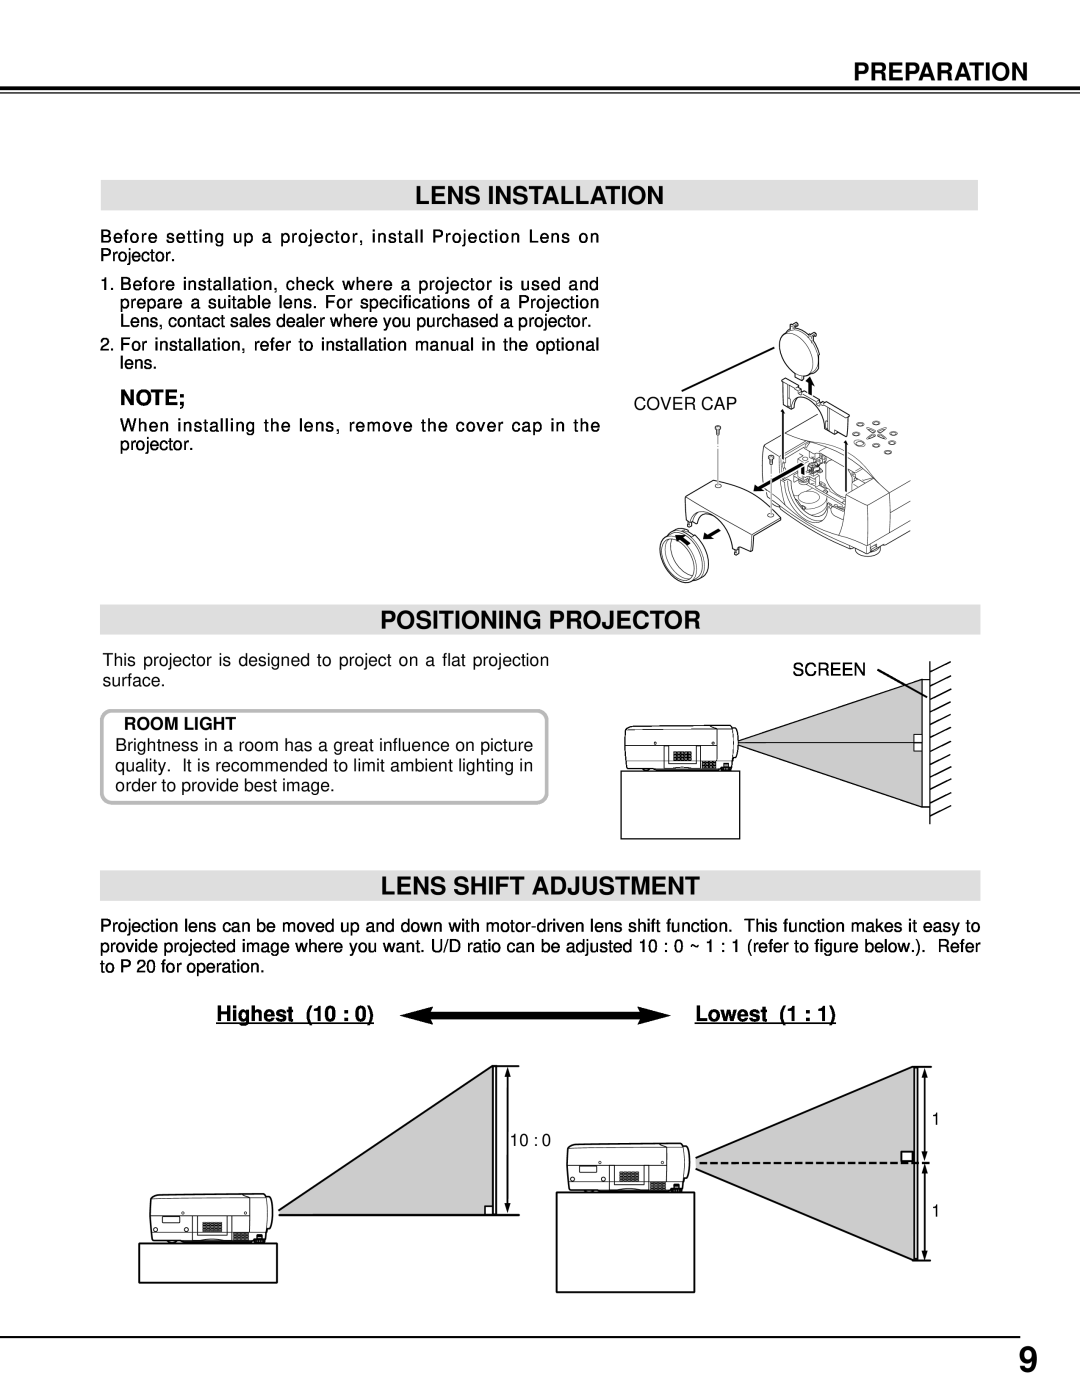 Christie Digital Systems 38-VIV205-01 Preparation Lens Installation, Positioning Projector, Lens Shift Adjustment 